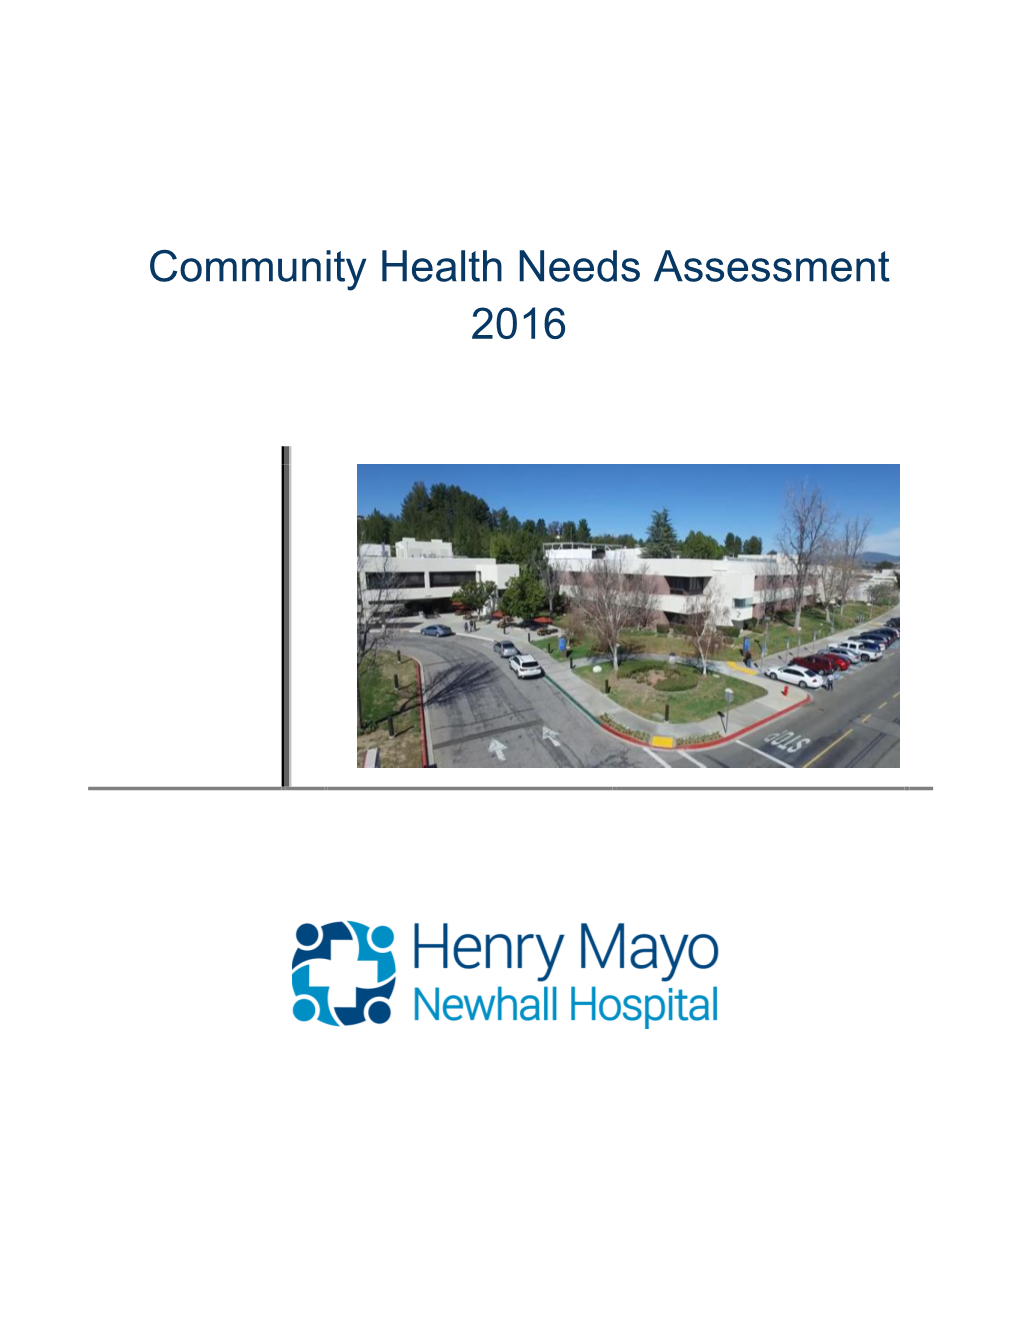 Community Health Needs Assessment 2016